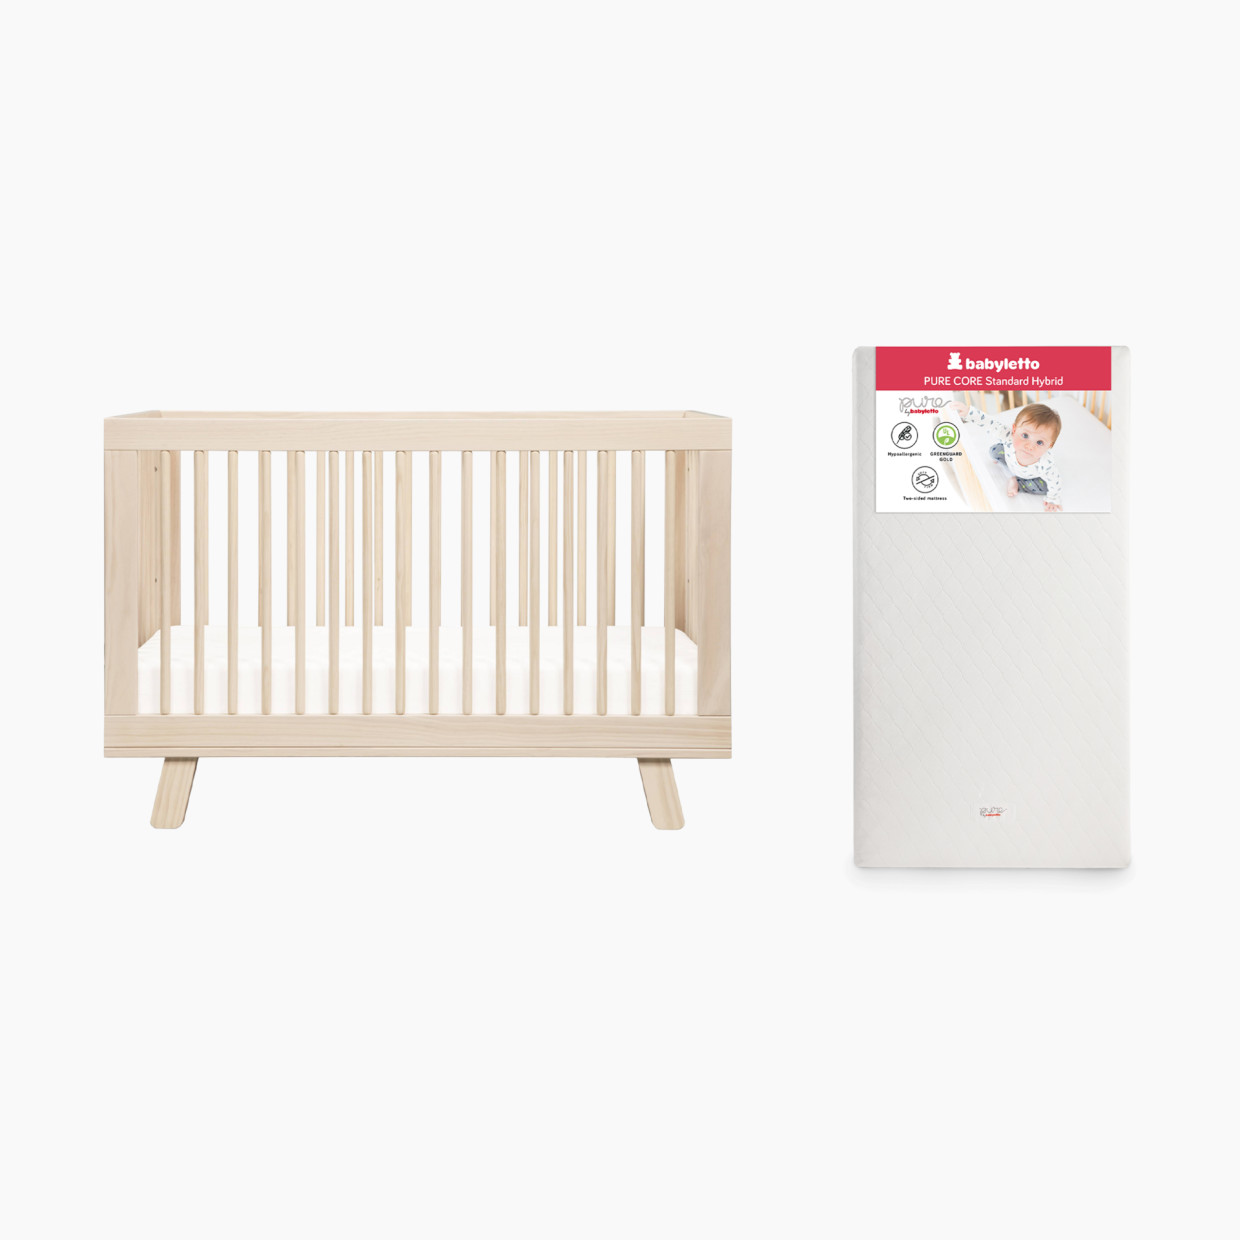 Babylist Hudson Crib & Pure Core Mattress Bundle - Washed Natural.